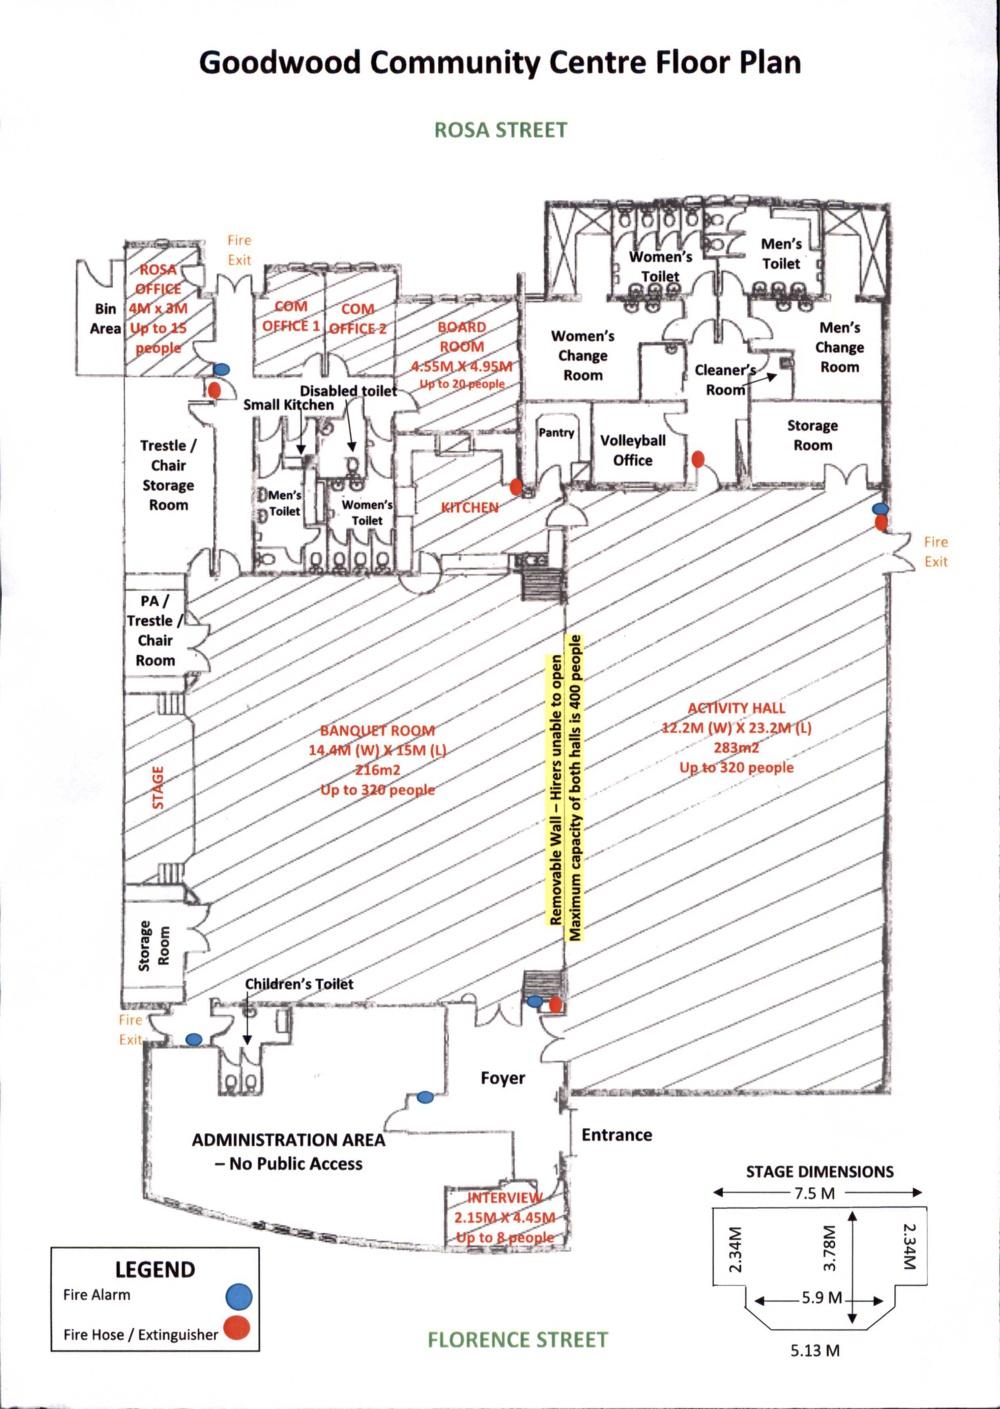 Goodwood Community Centre floor plan